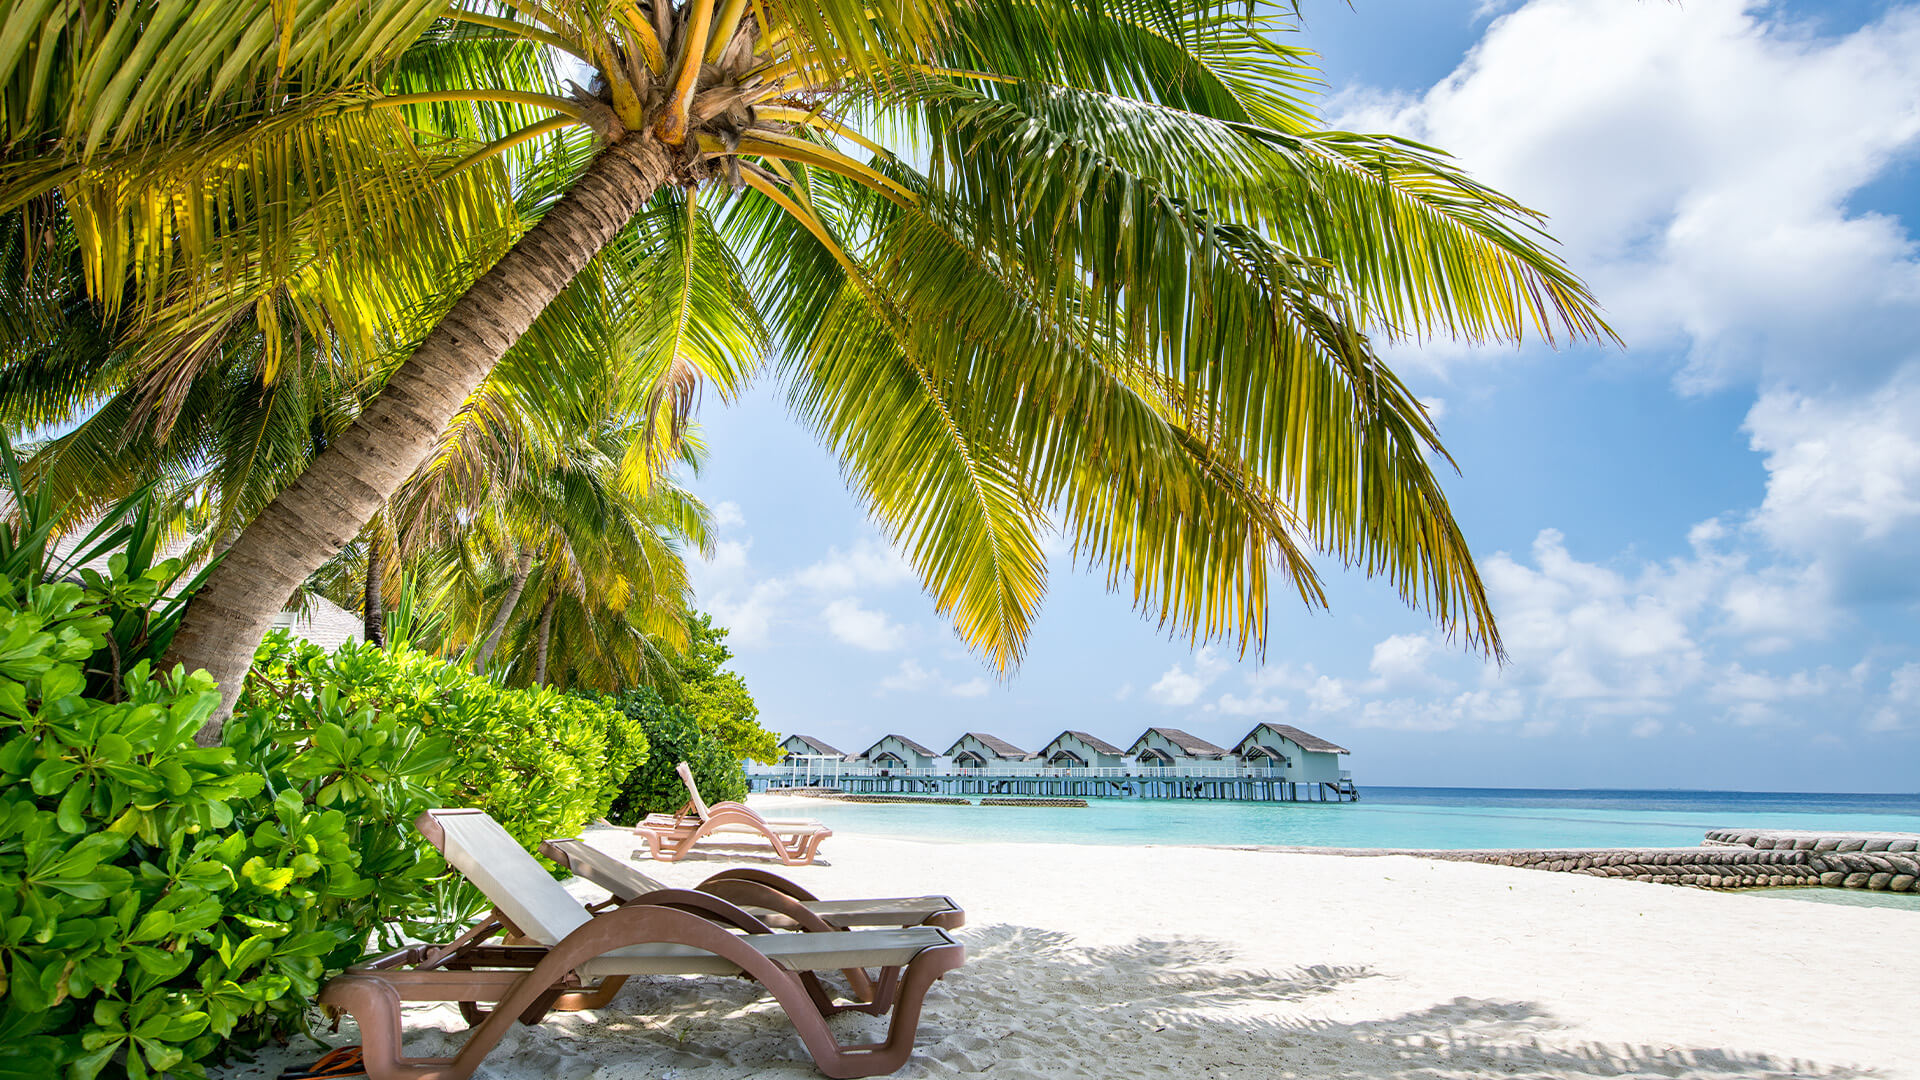 Luxury Sun Loungers on Beach by a Palm Tree